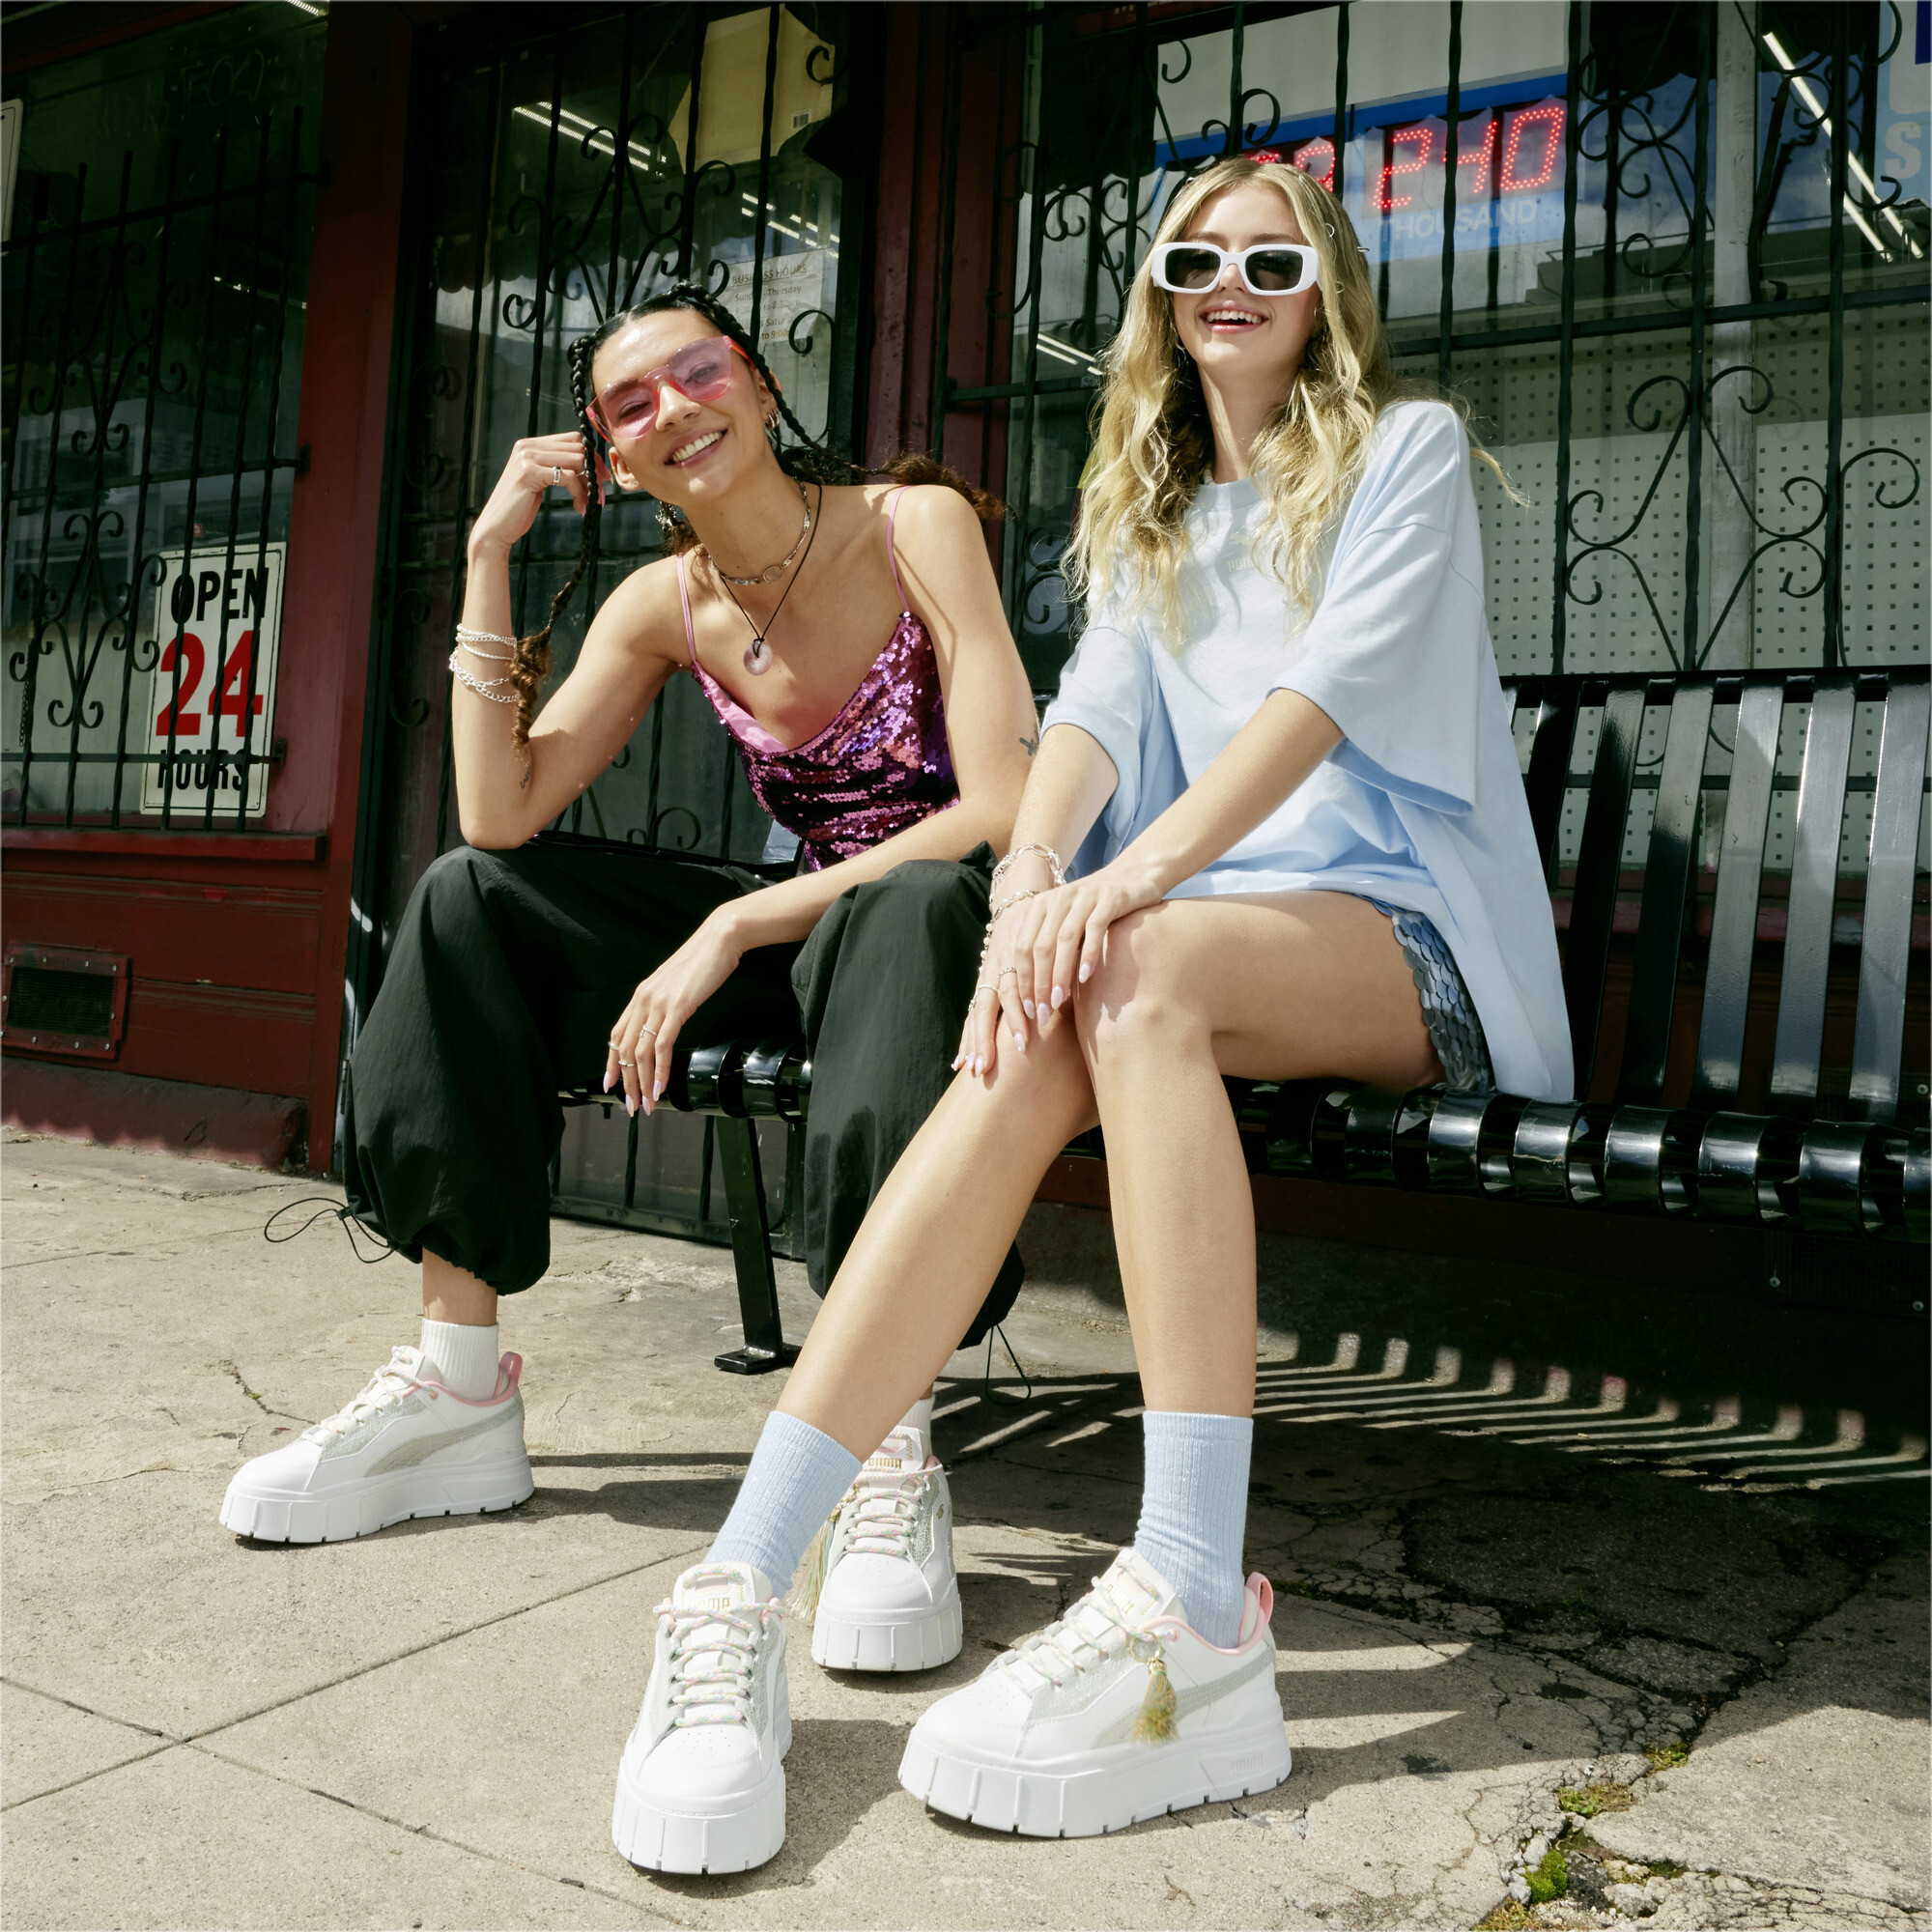 Women's PUMA Mayze Stack Fashion Sneakers In White, Size EU 37